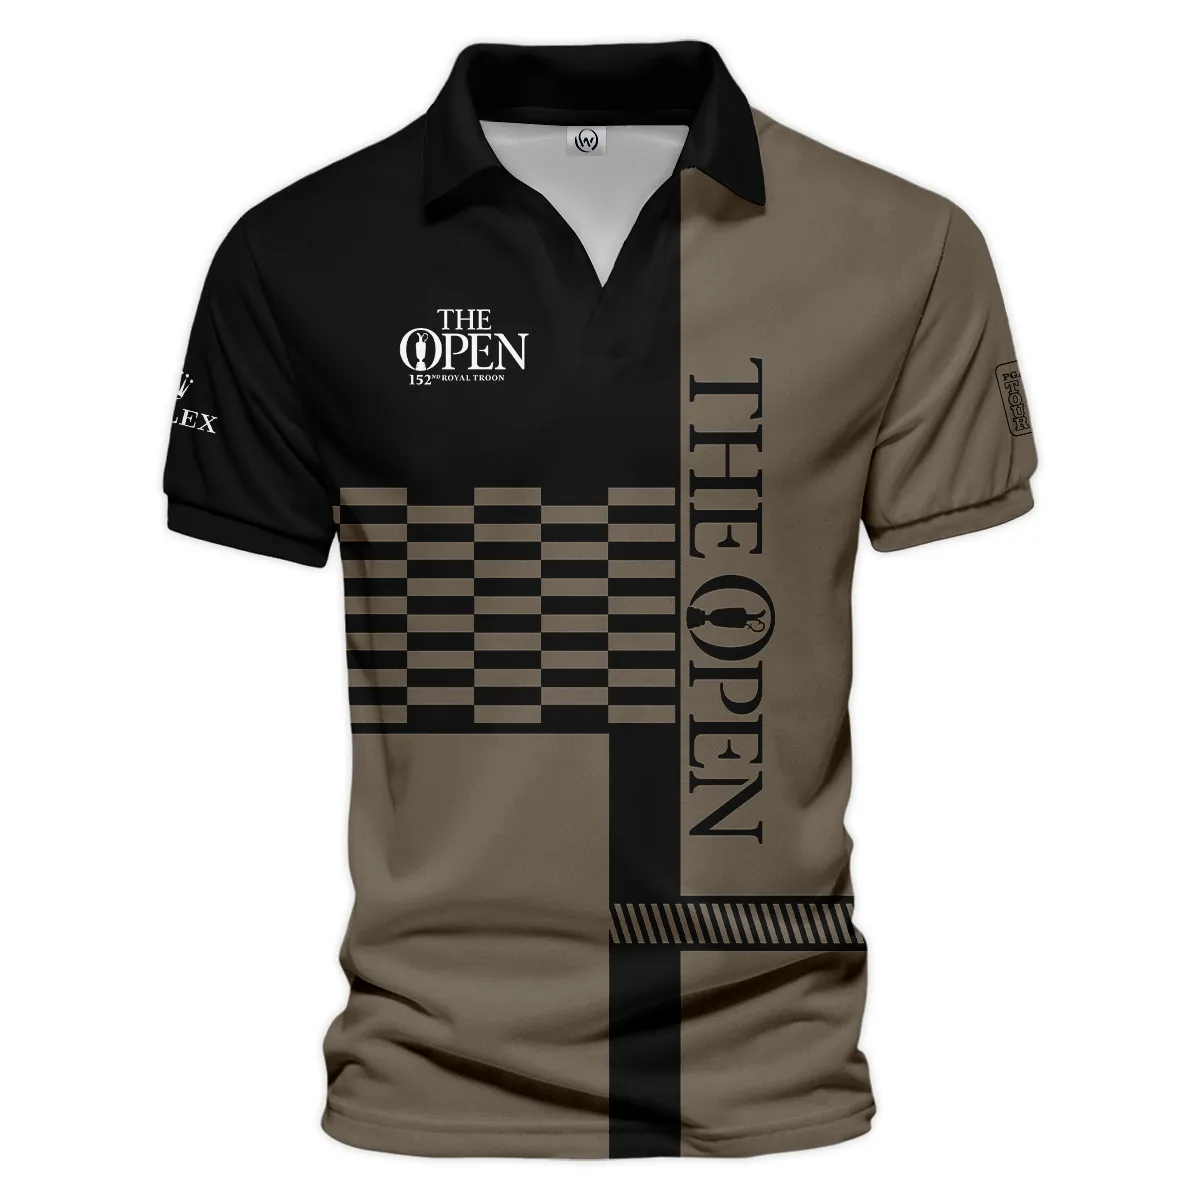 Golf Brown Color 152nd Open Championship Pinehurst Rolex Zipper Hoodie Shirt All Over Prints QTTOP206A2ROXZHD